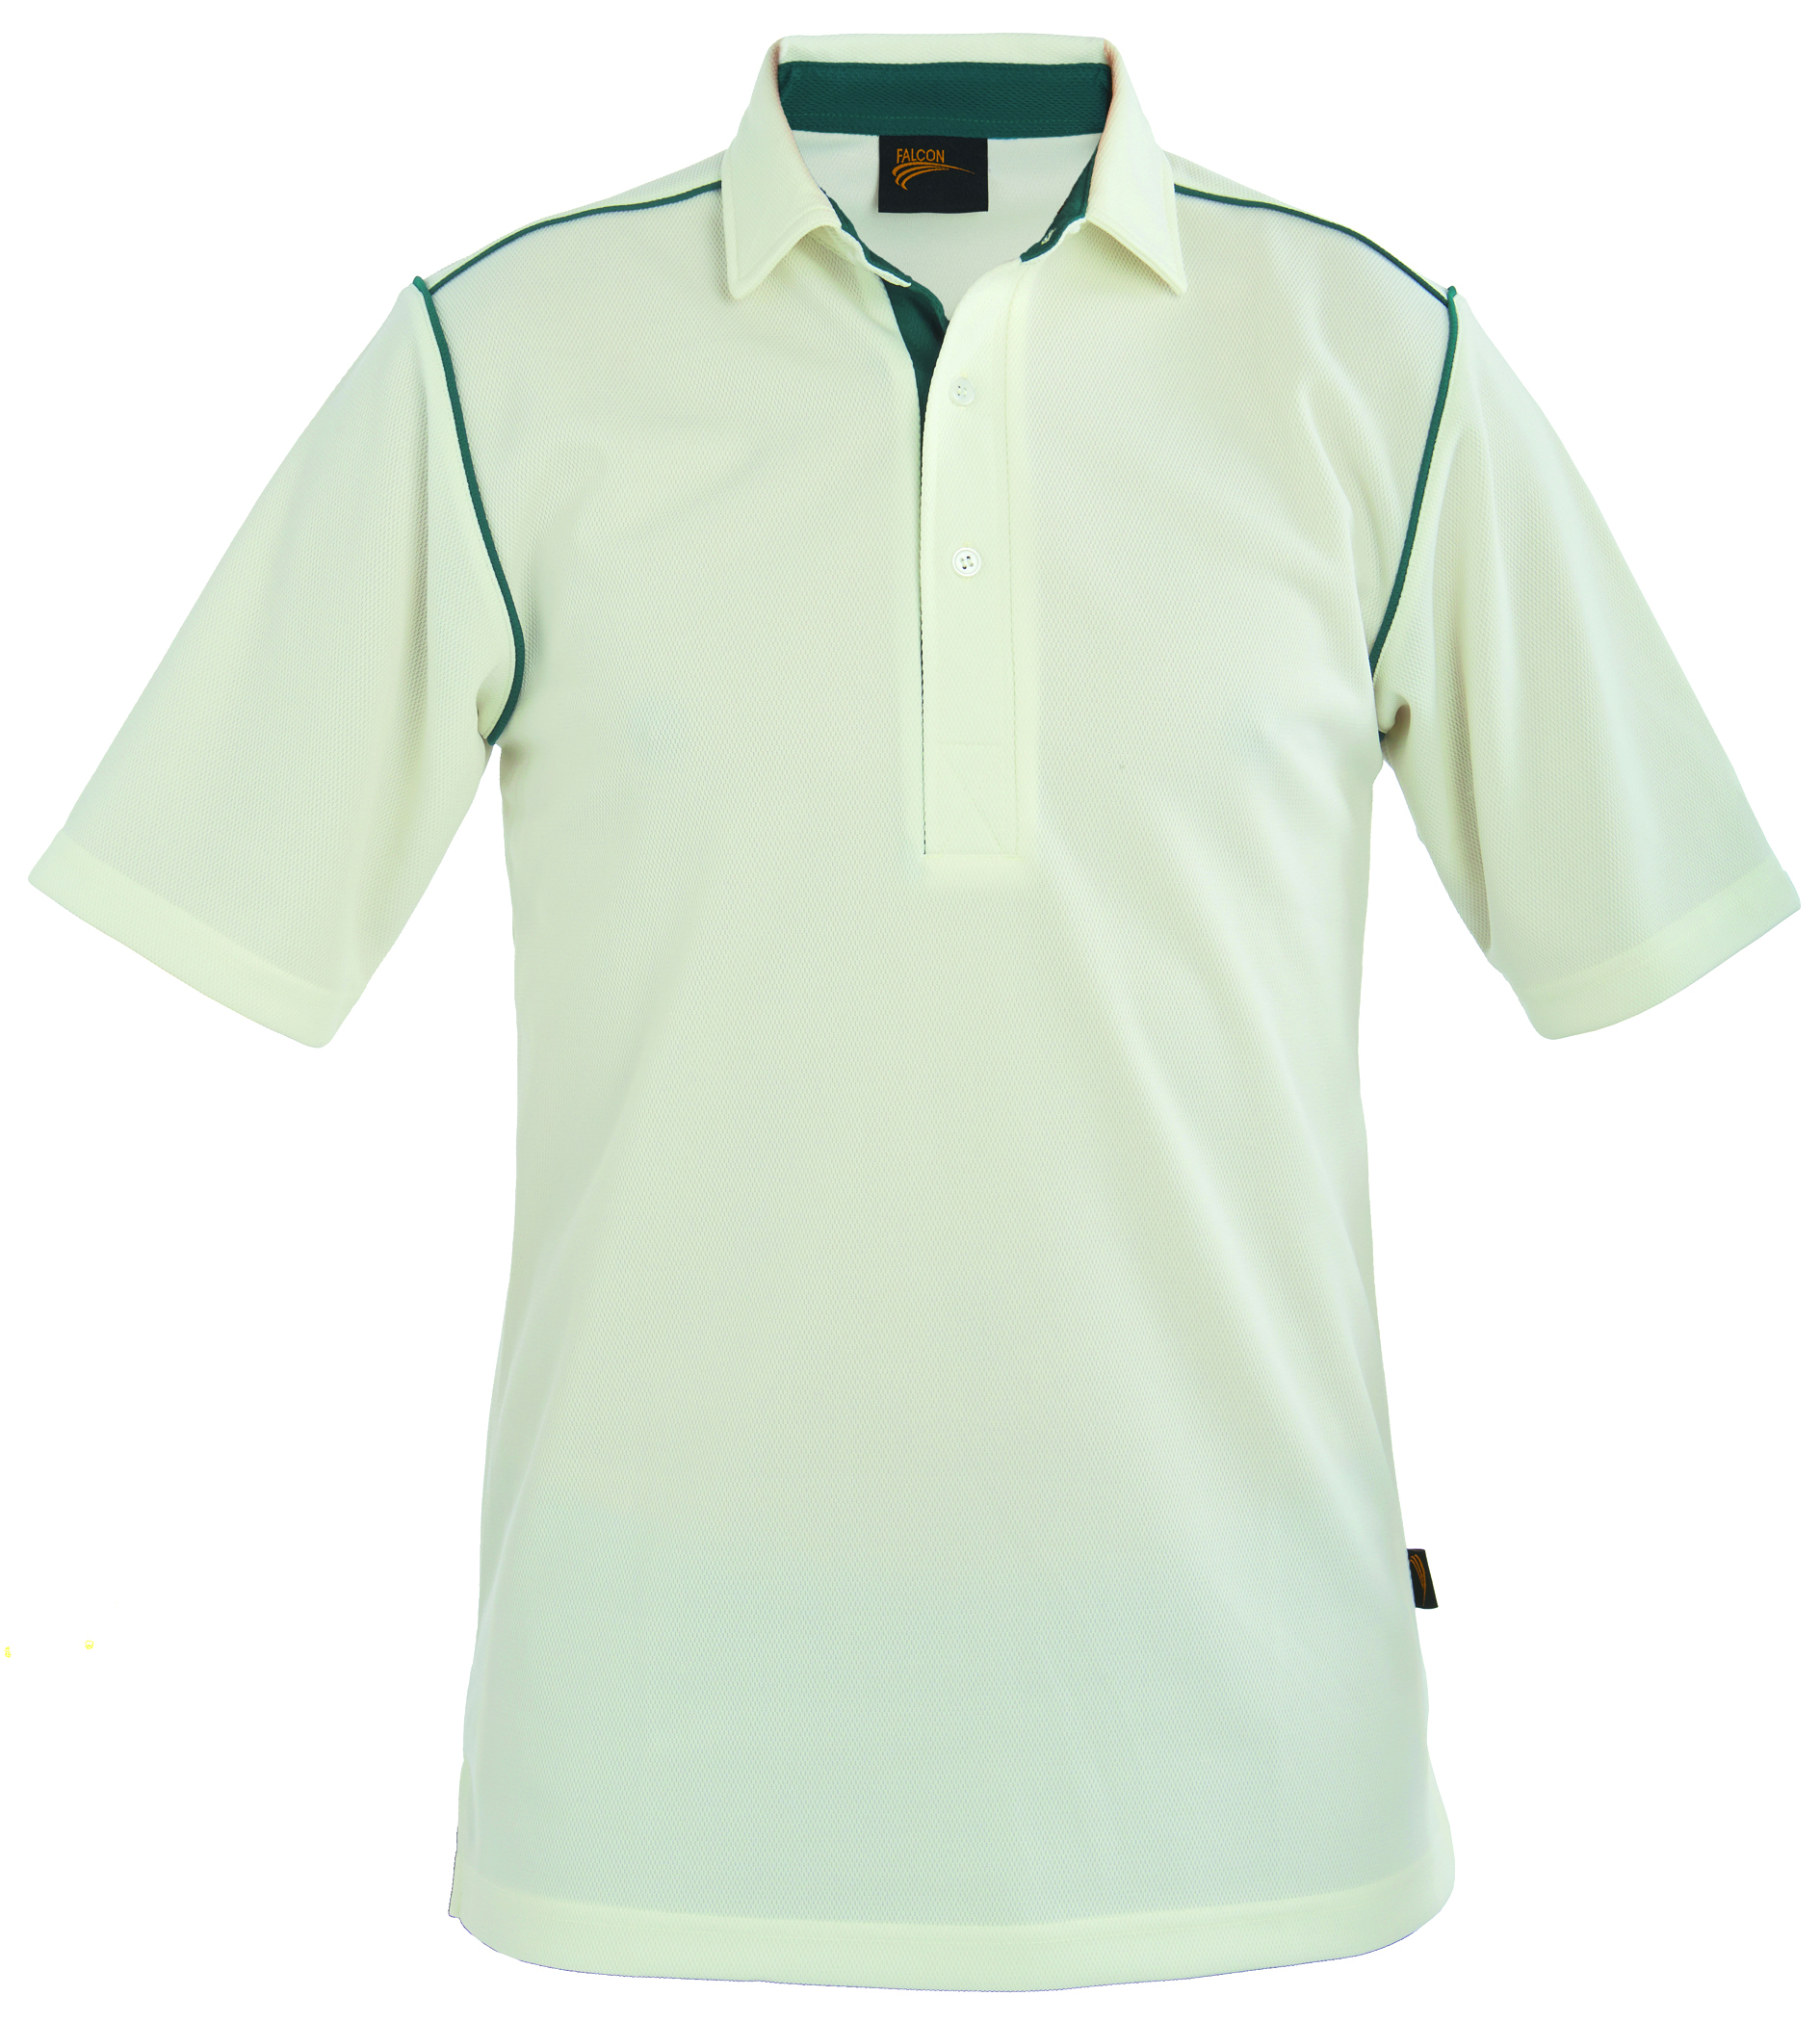 Cricket Shirt Trimmed 1/2 Length Sleeve 